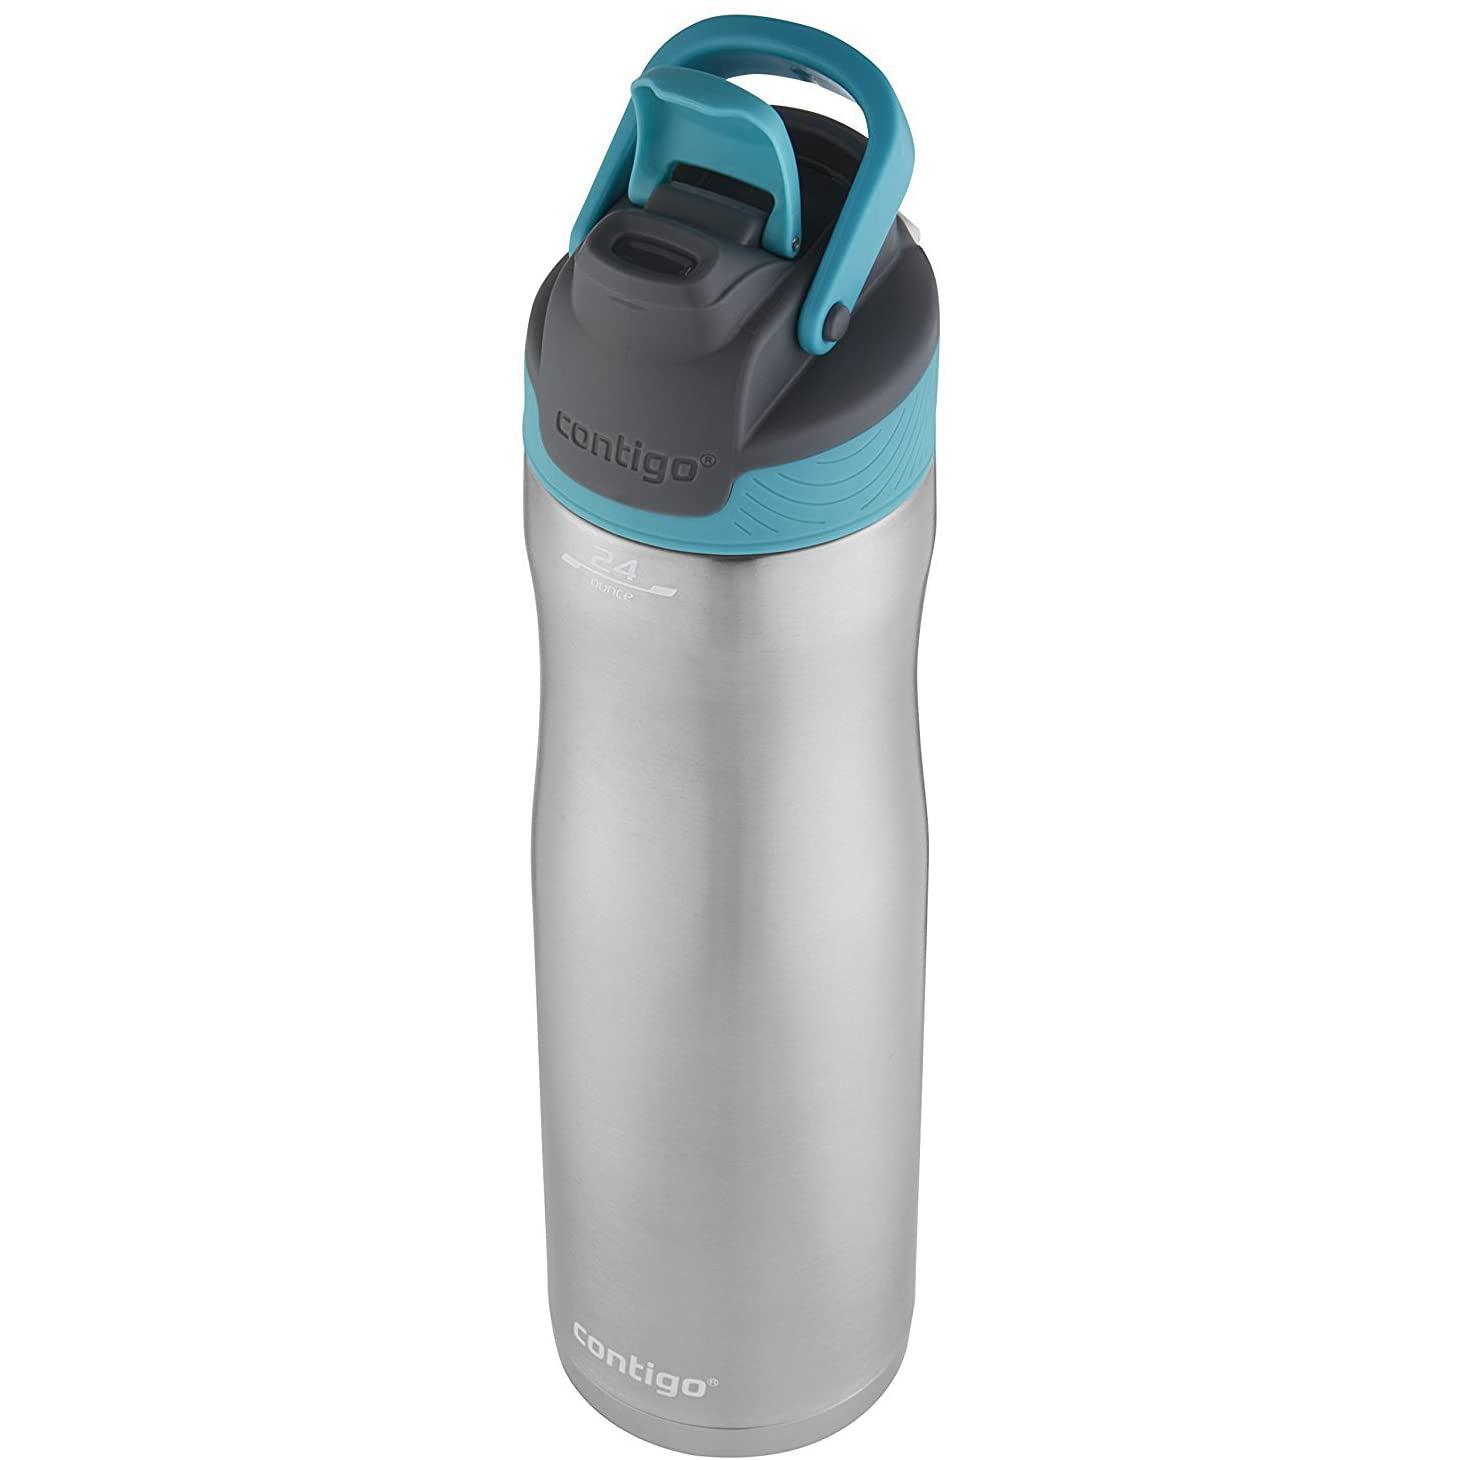 Contigo Autoseal Chill Steainless Steel Water Bottle for $11.97